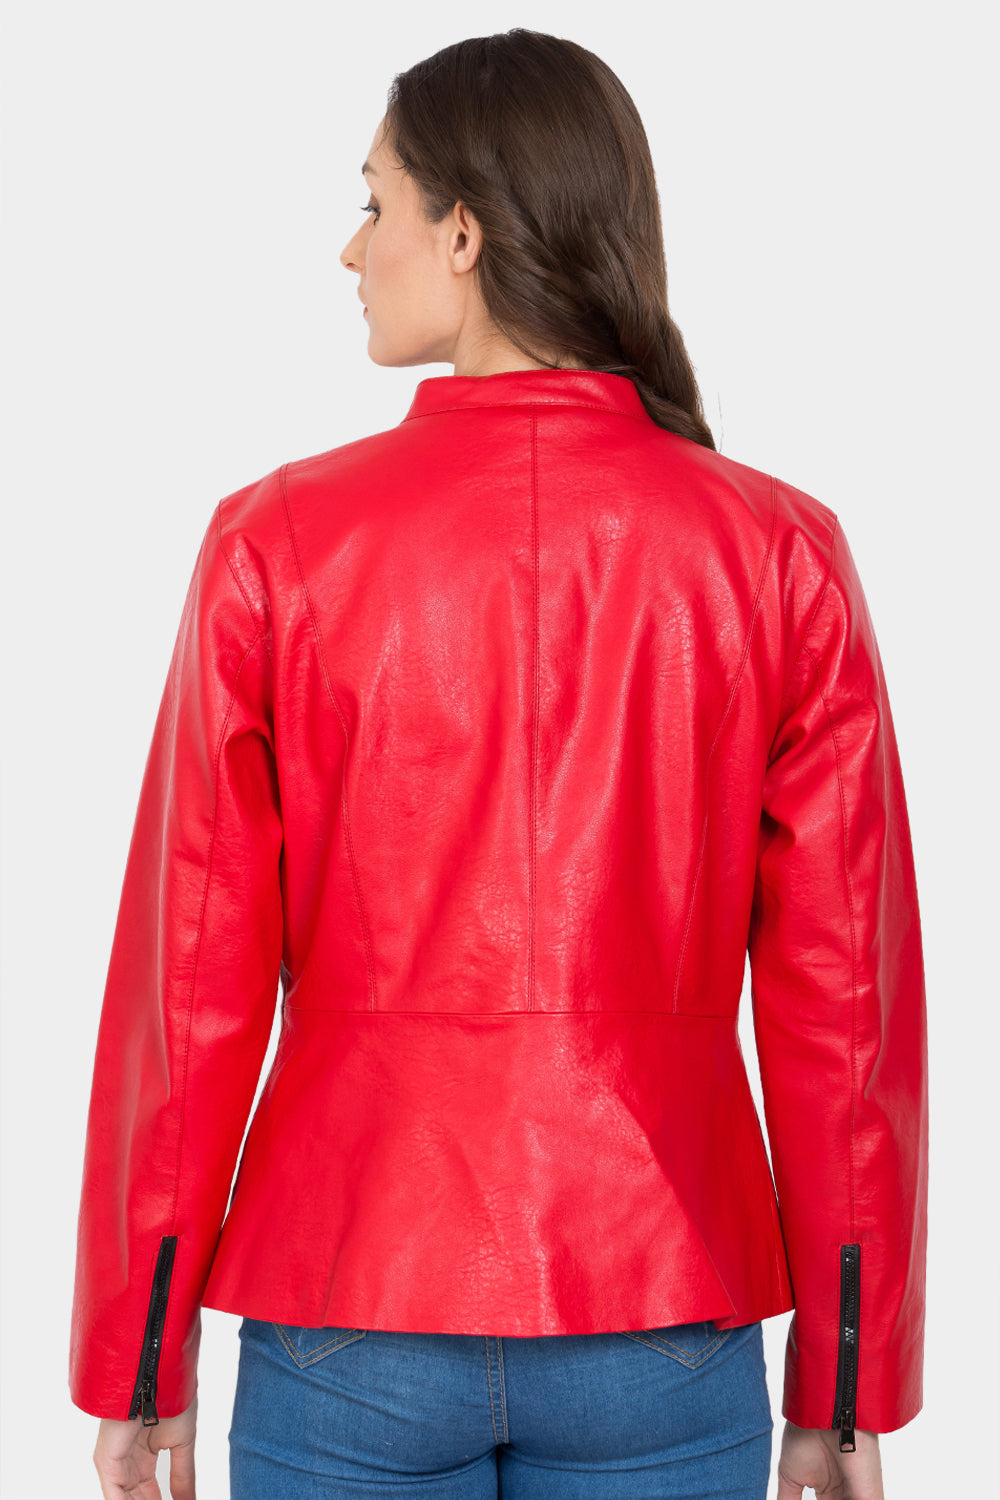 Justanned Peplum Women Leather Jacket